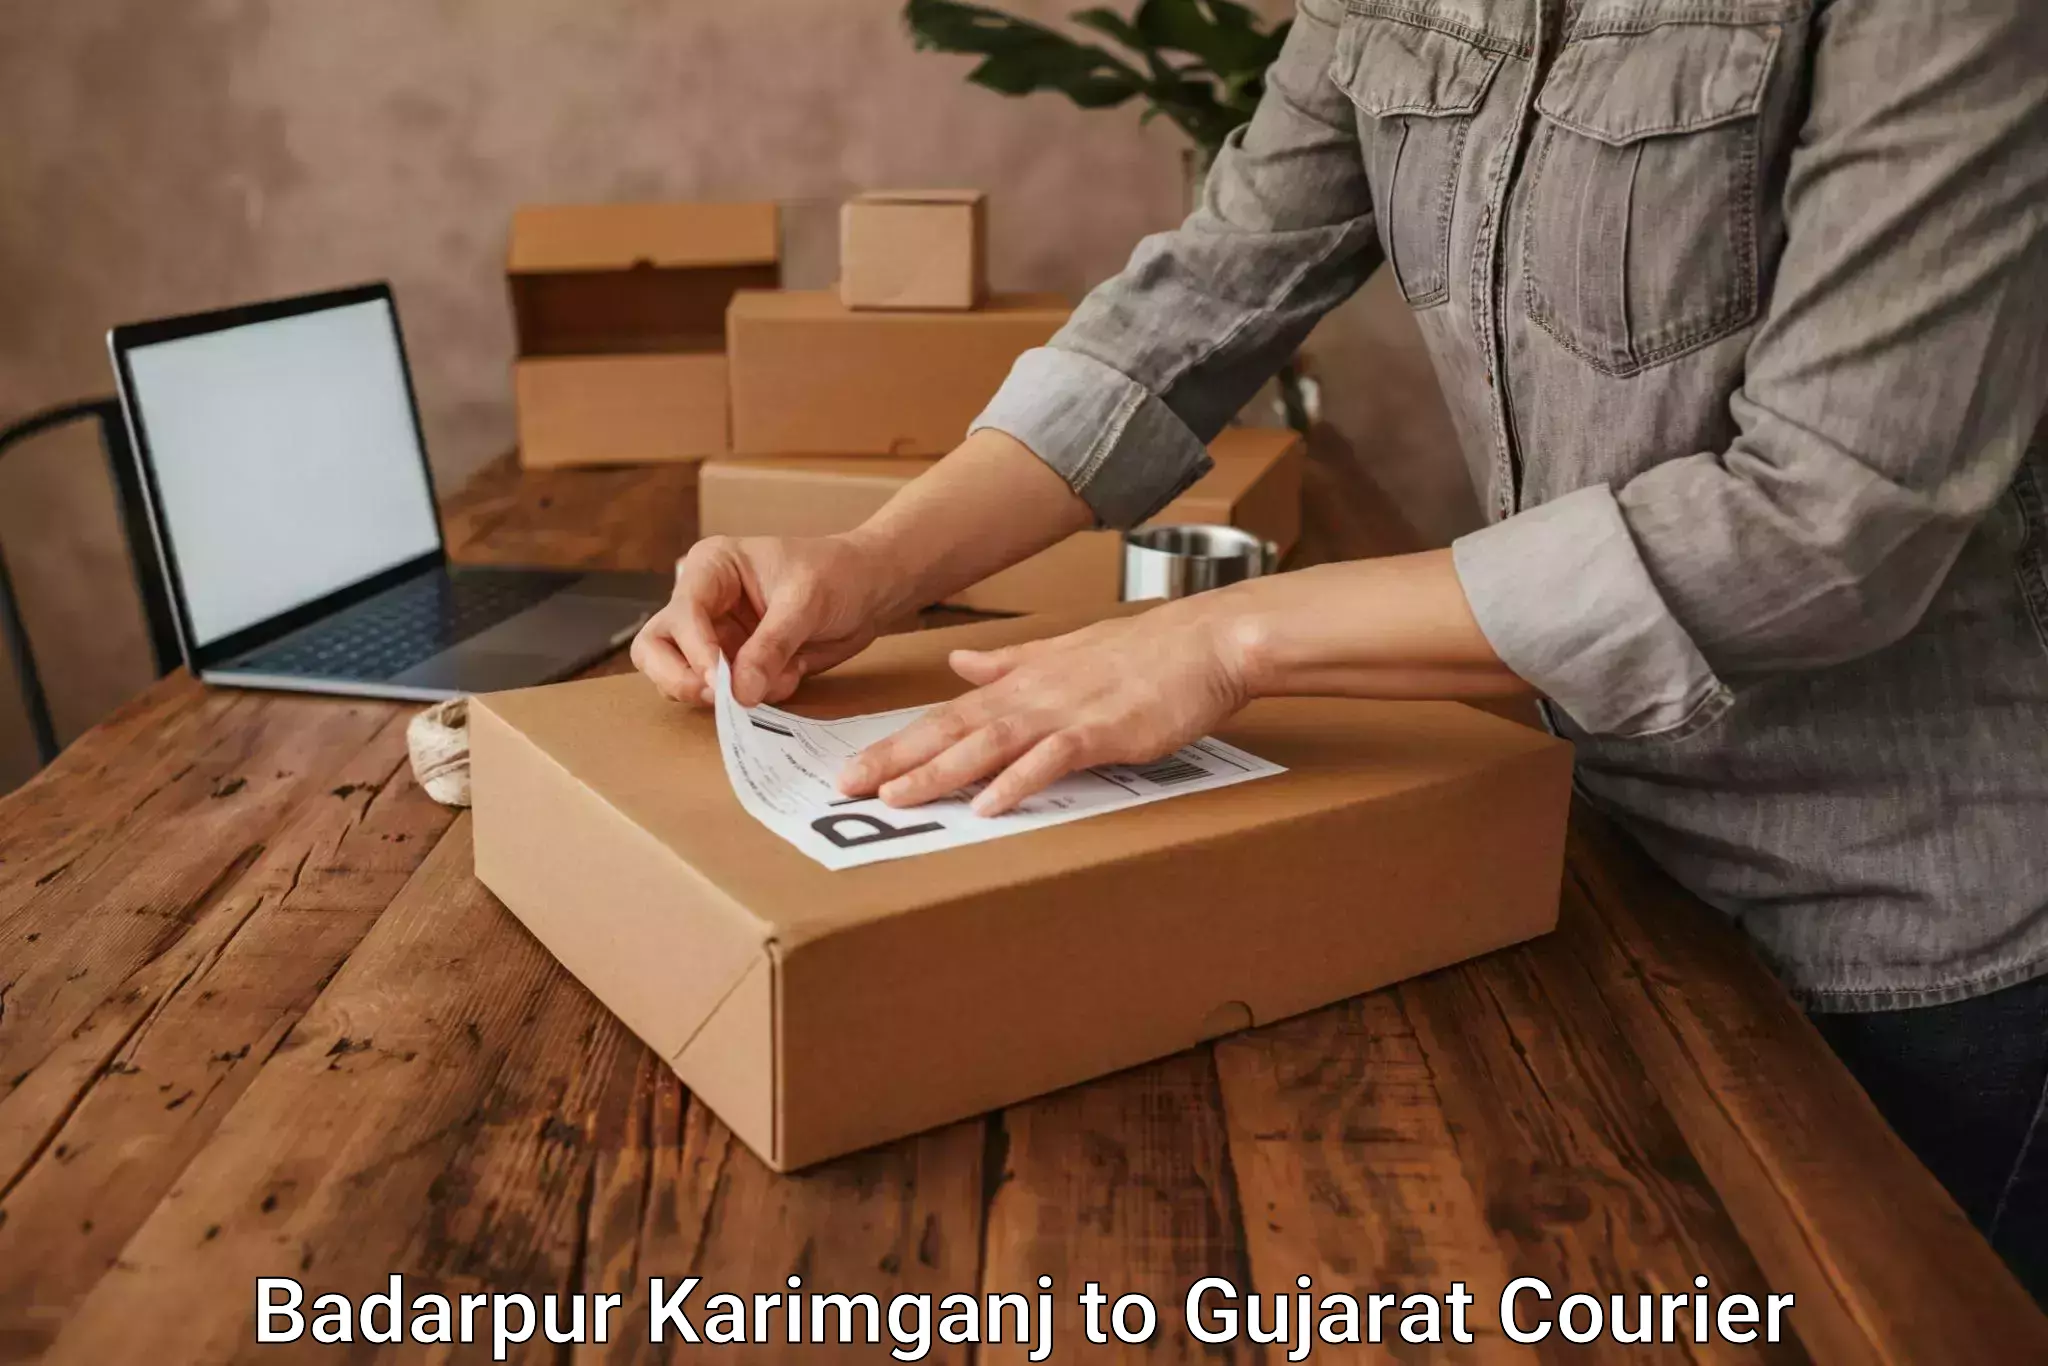 Courier service comparison Badarpur Karimganj to Banaskantha